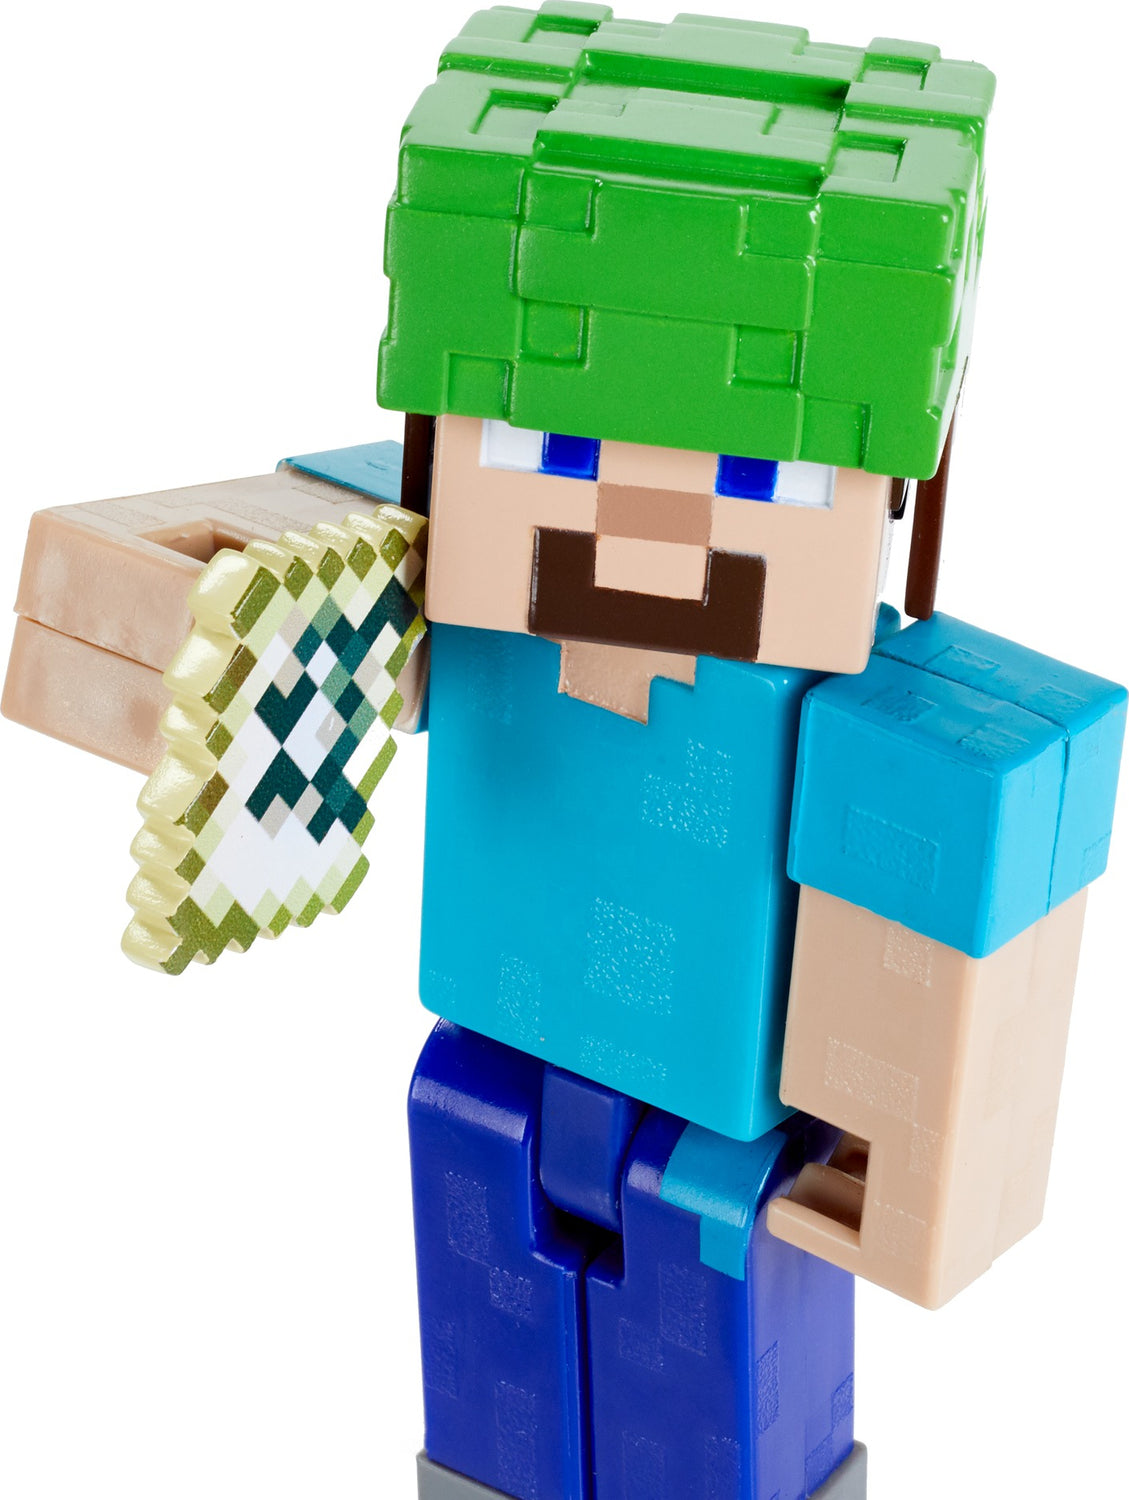 Minecraft Craft-A-Block Figures (assorted)